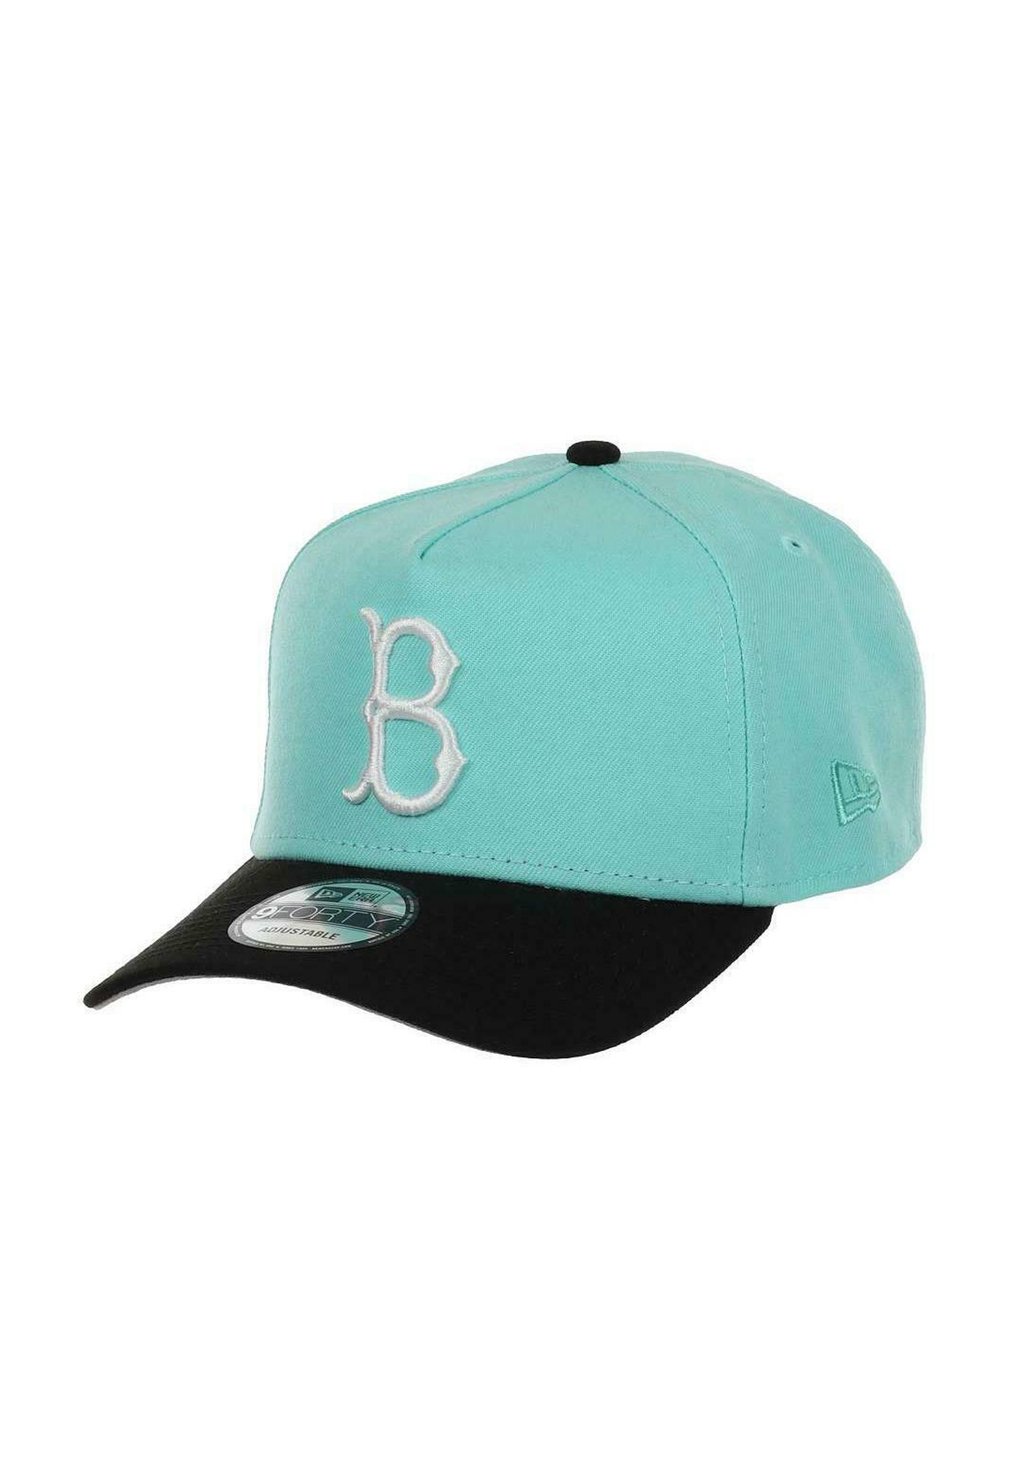 Бейсболка BROOKLYN DODGERS MLB 1ST WORLD CHAMPIONSHIP 1955 SIDEPATCH COOPE New Era, цвет turquoise